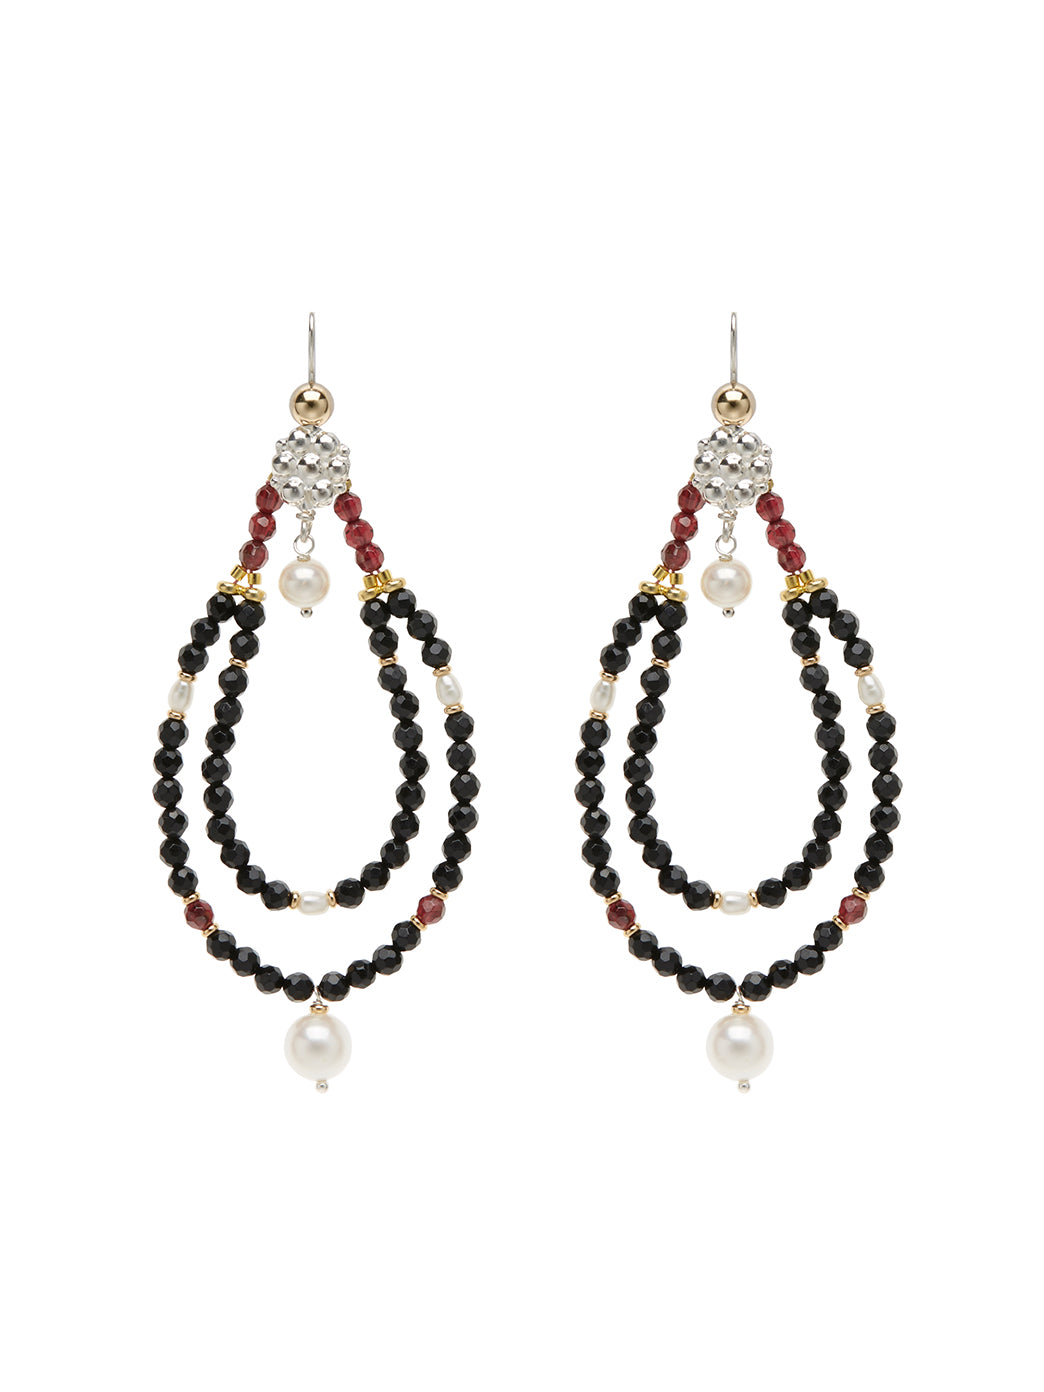 Fiorina Jewellery Rahini Earrings Black Onyx